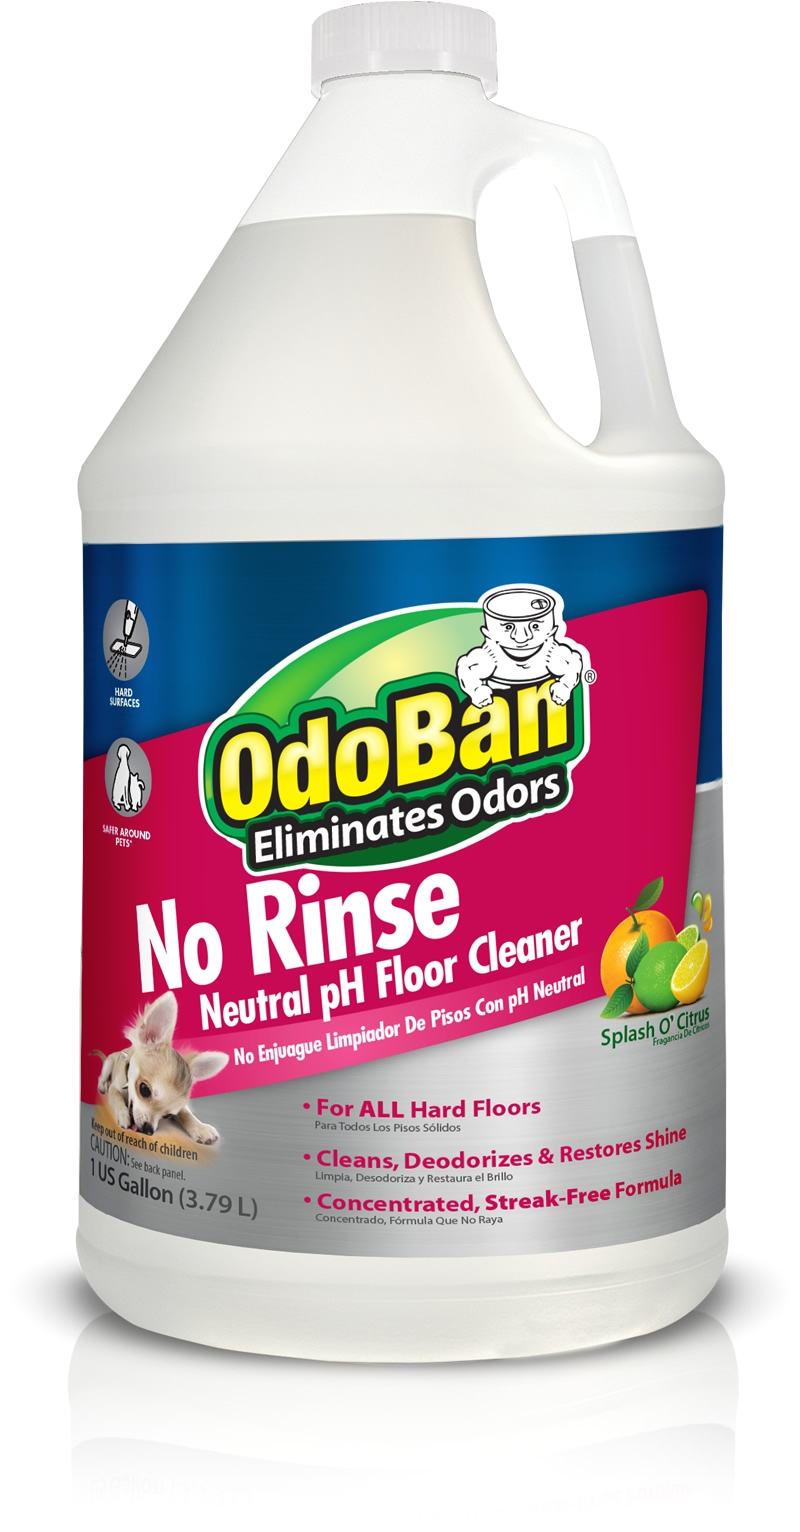 no rinse neutral ph floor cleaner